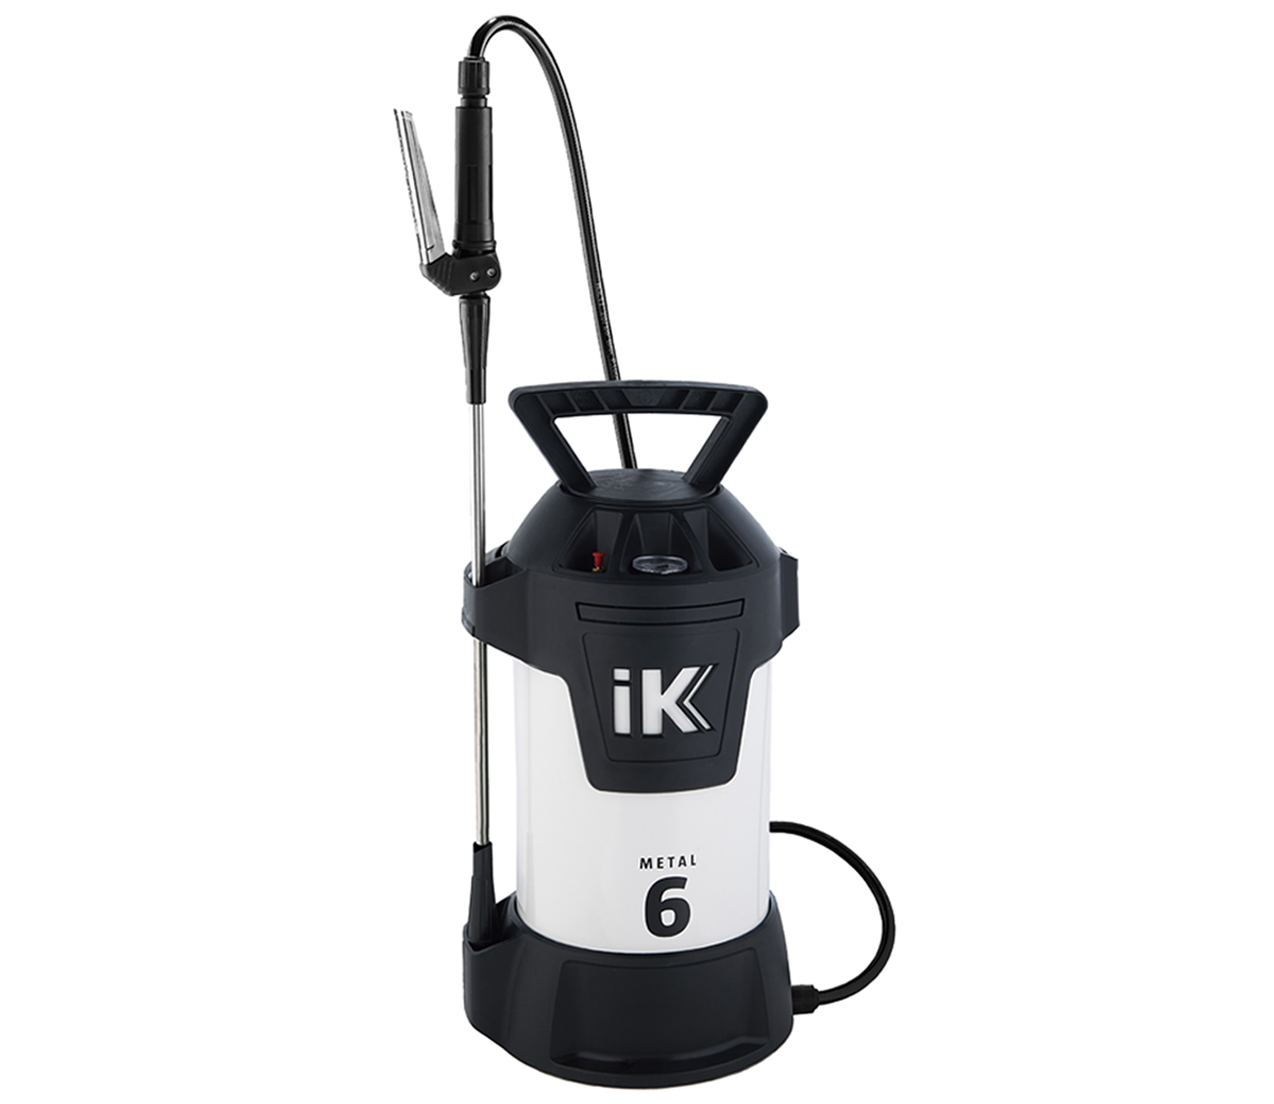 IK 2 Gallon Metal 6 Professional Metal & Stainless Steel Sprayer